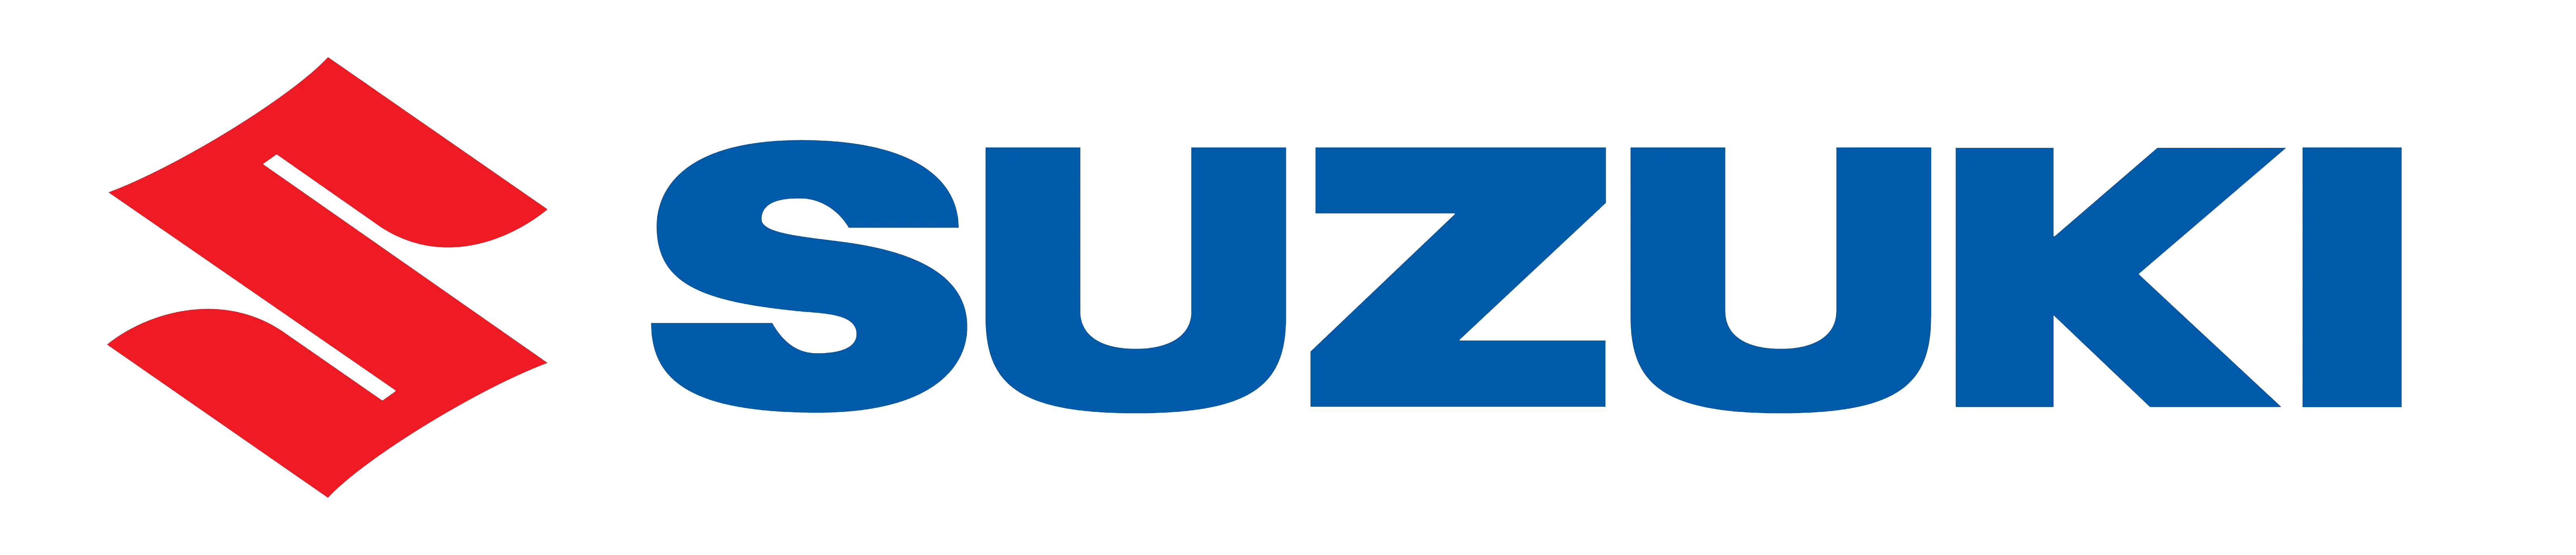 Логотип Suzuki, HD Png, Смысл, Информация